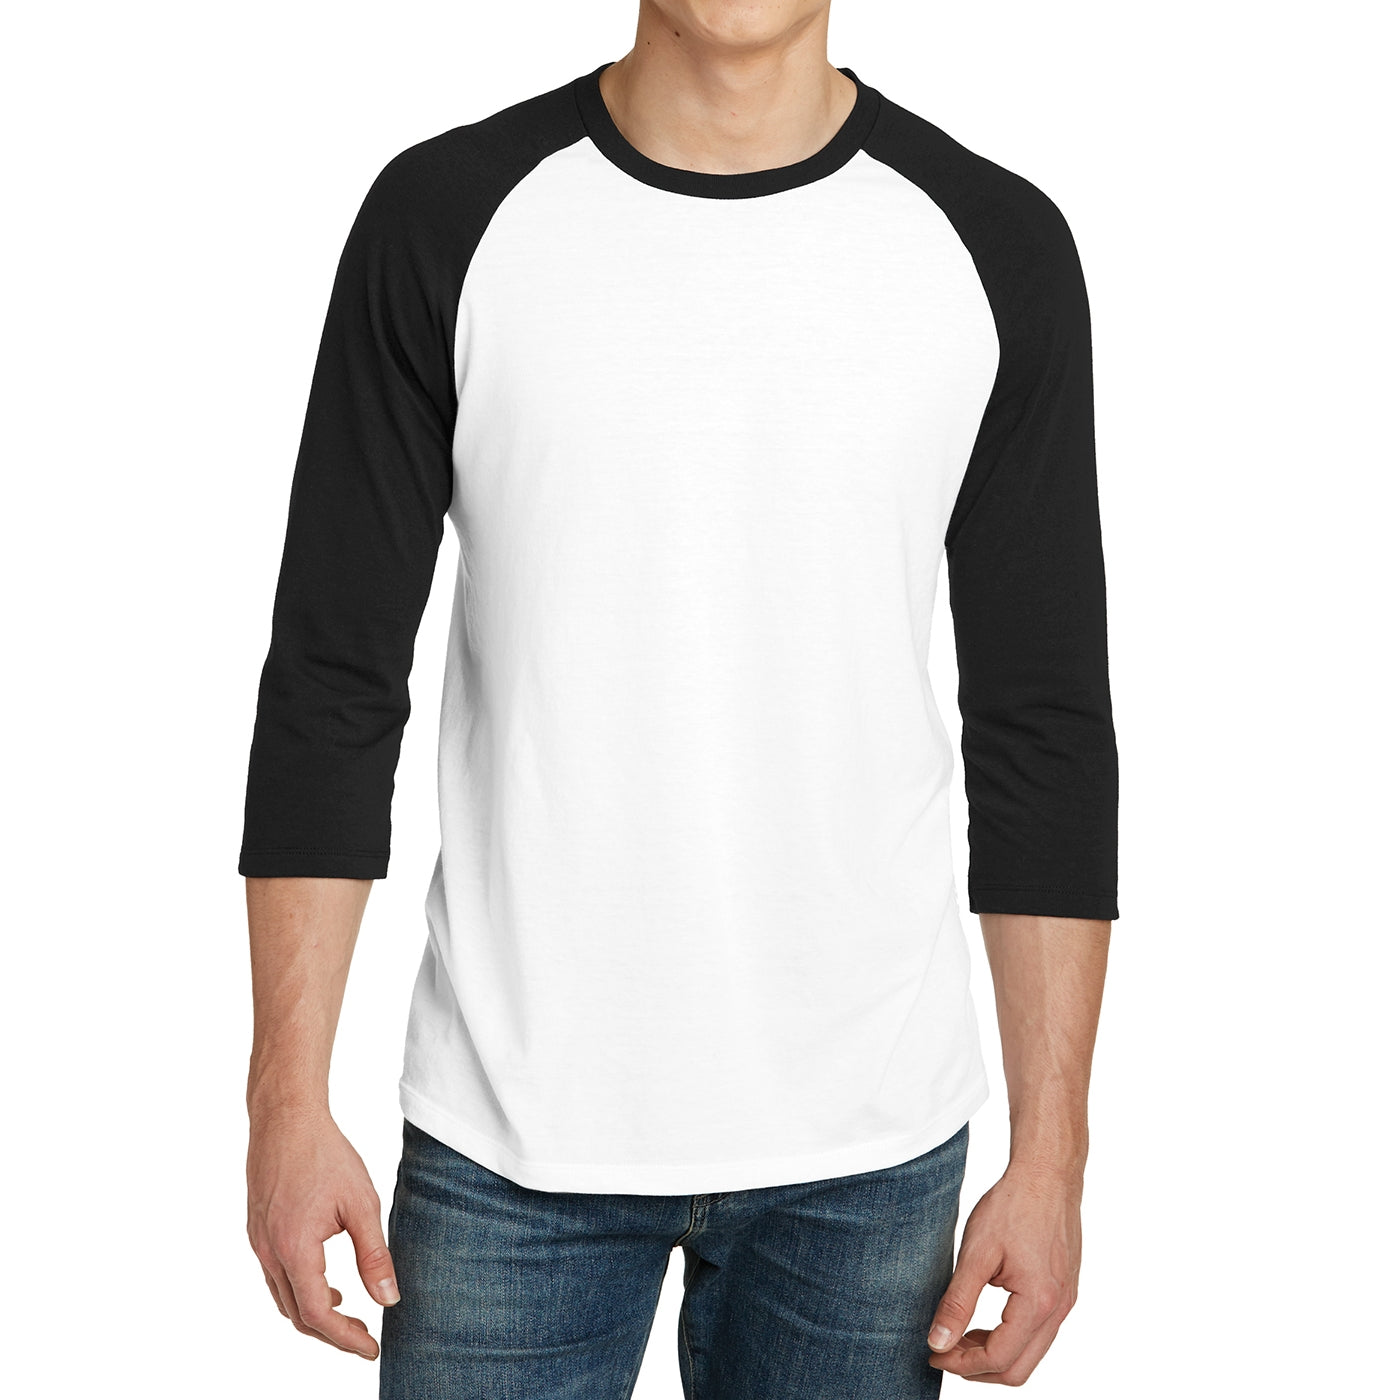 black and white raglan shirt